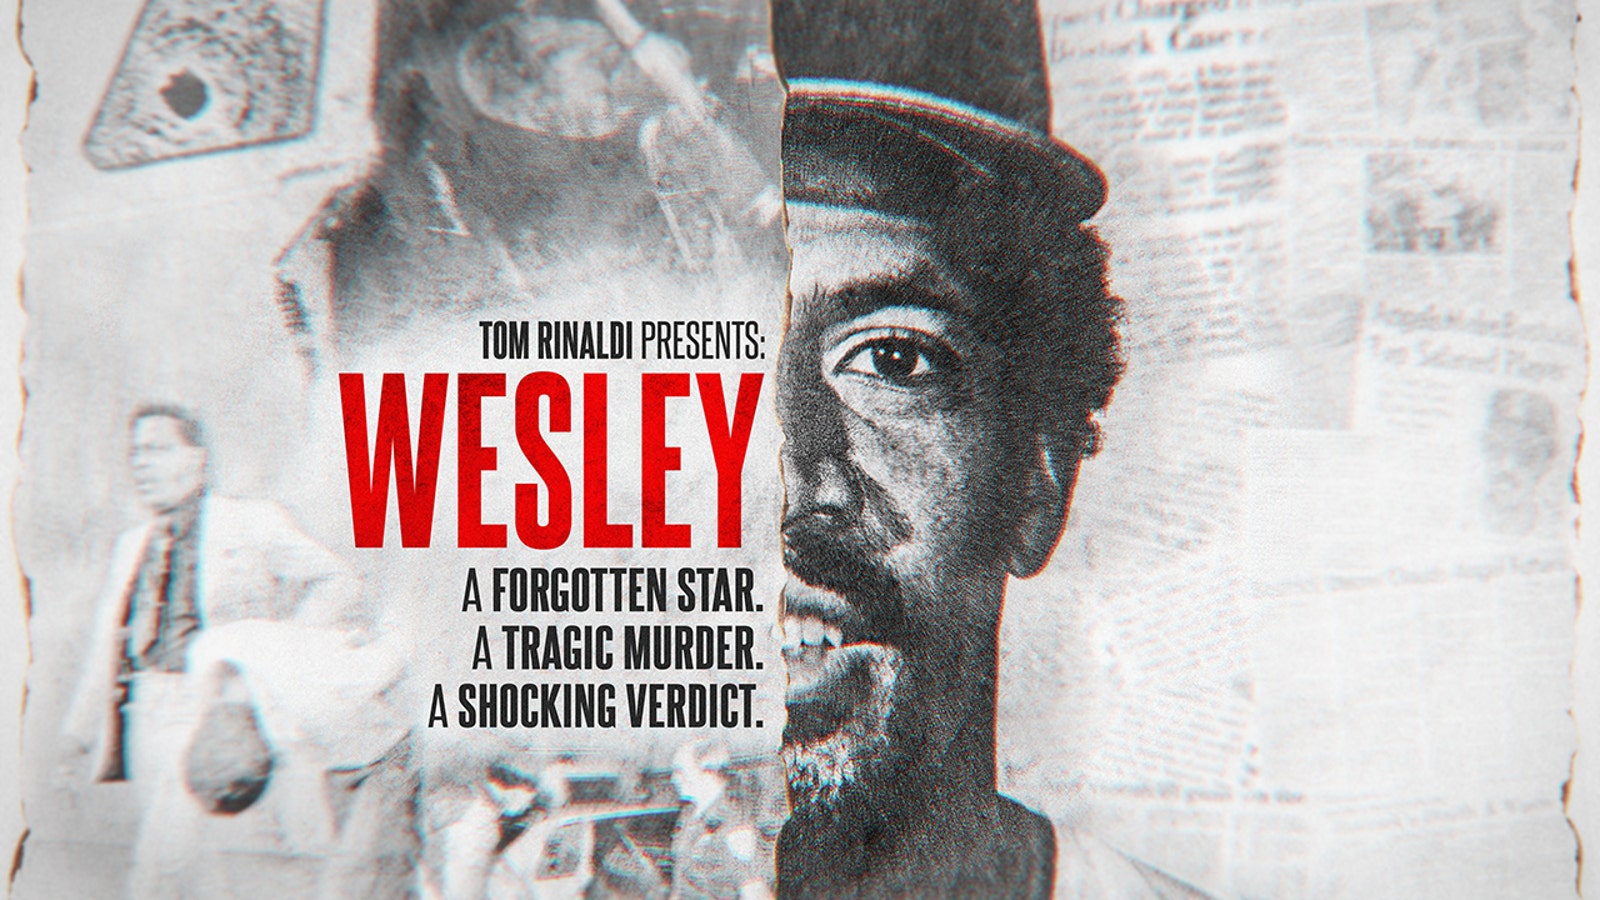 Tom Rinaldi Presents: "Wesley"